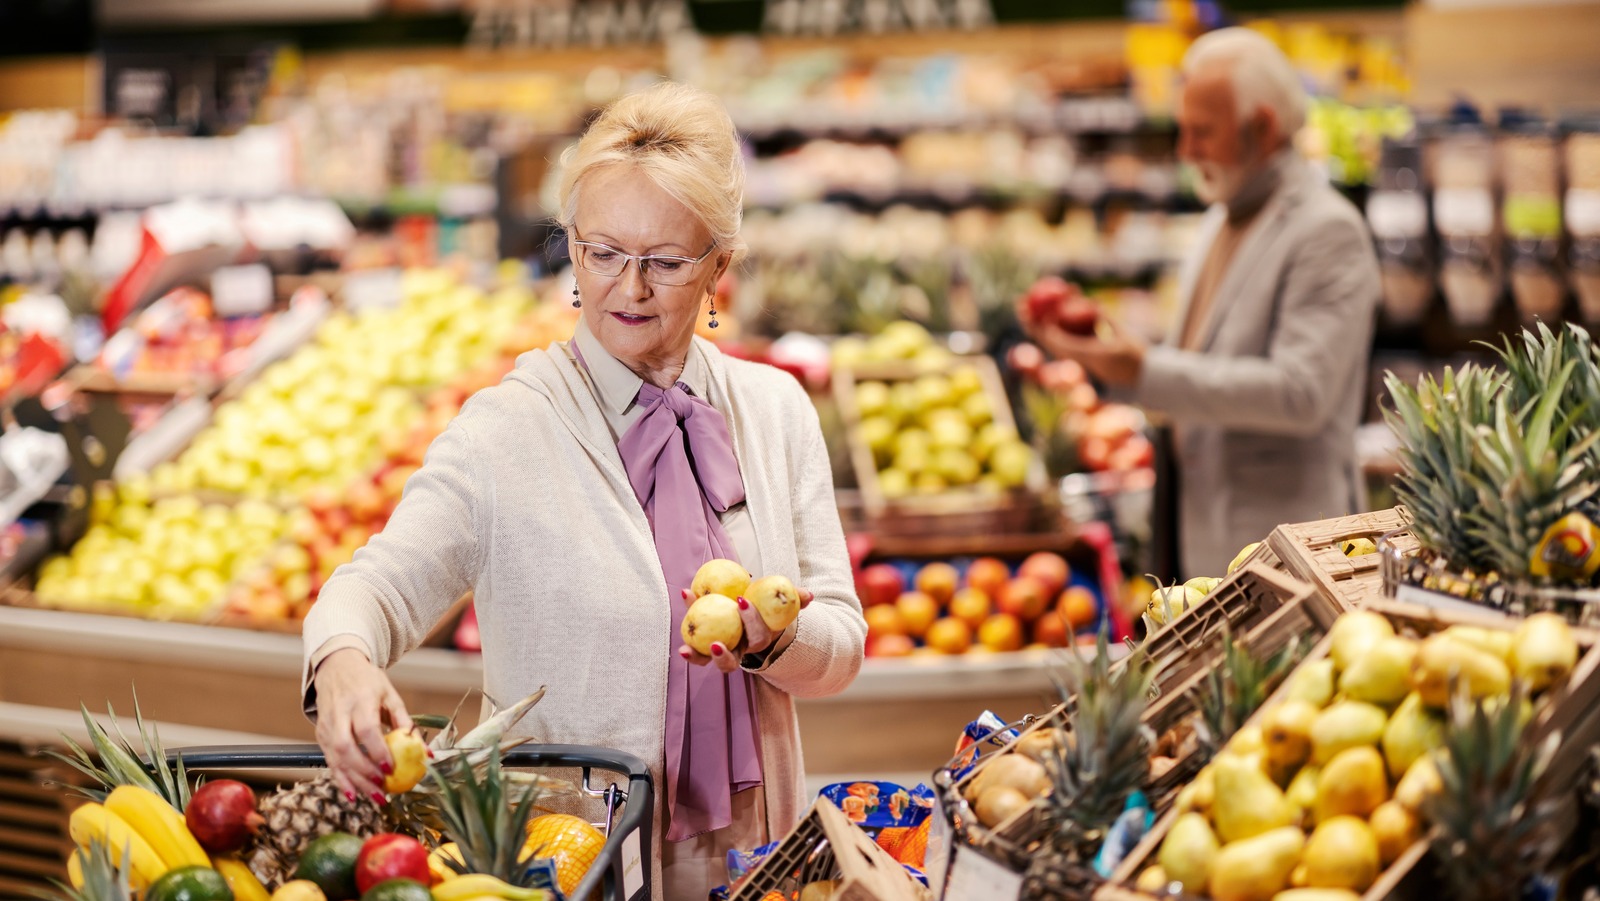 Supermarkets Enlist Shoppers in Nutrition Programs